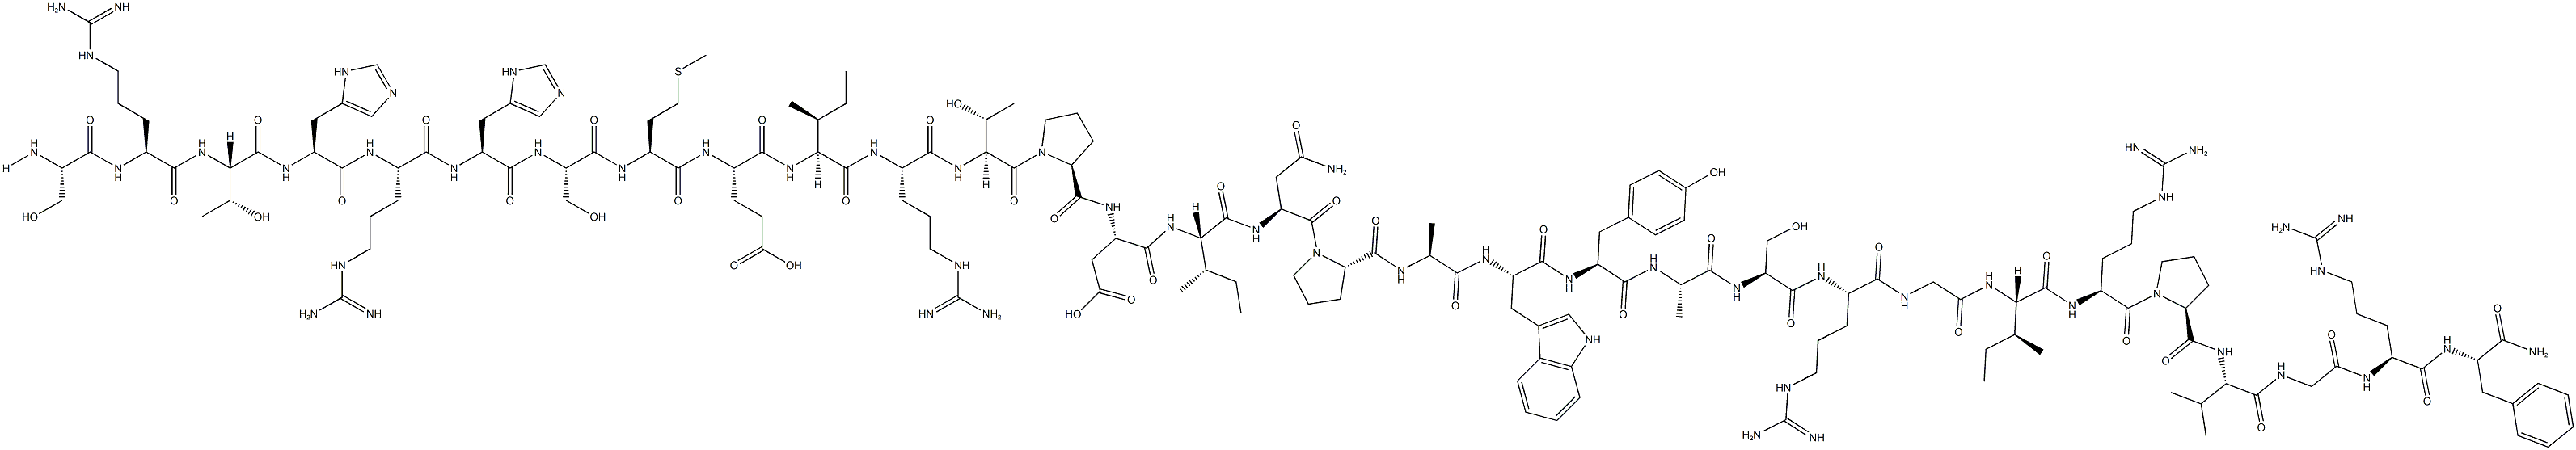 Prolactin-Releasing Peptide (1-31) (human)|H-SER-ARG-THR-HIS-ARG-HIS-SER-MET-GLU-ILE-ARG-THR-PRO-ASP-ILE-ASN-PRO-ALA-TRP-TYR-ALA-SER-ARG-GLY-ILE-ARG-PRO-VAL-GLY-ARG-PHE-NH2